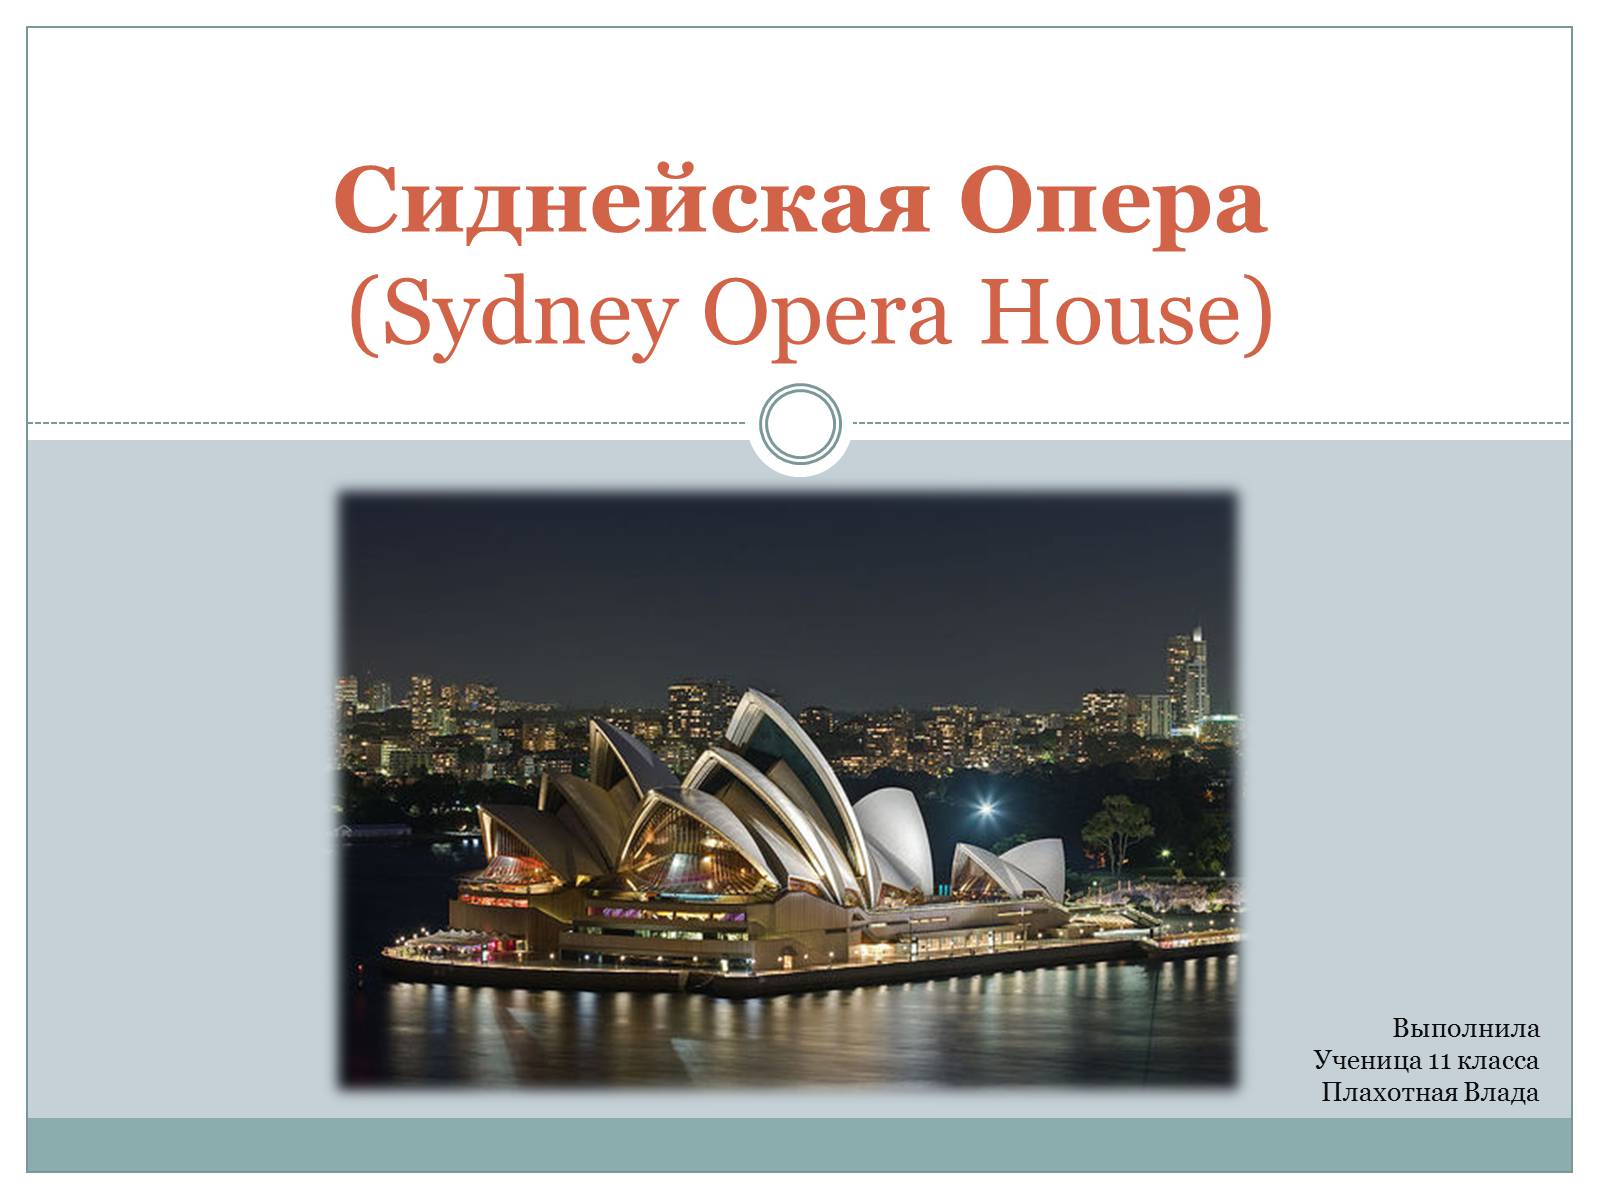 Презентація на тему «Сиднейская Опера» - Слайд #1